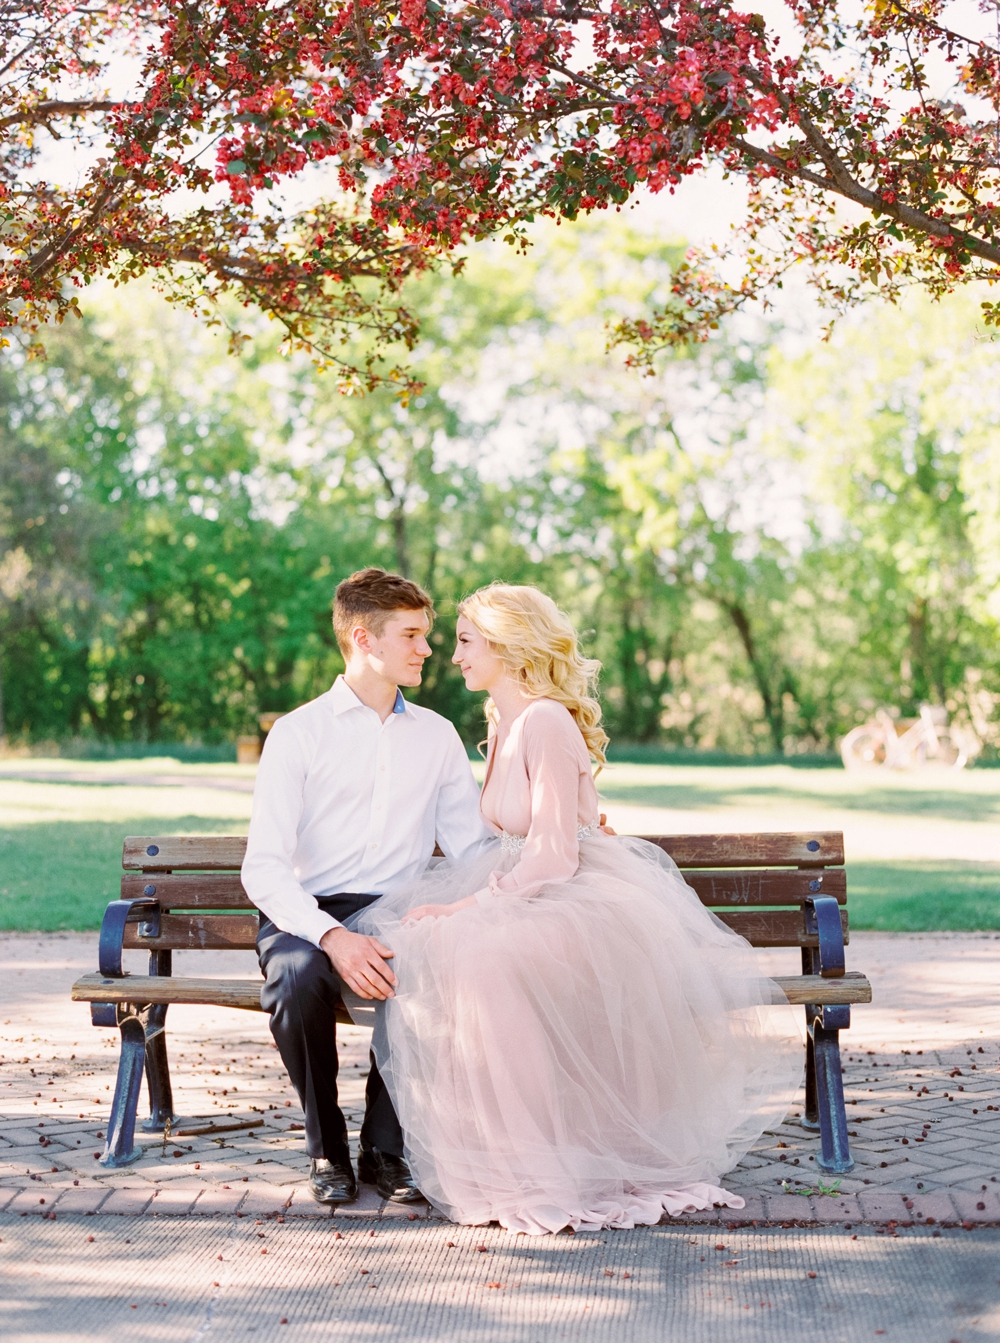 Calgary Wedding Photographers | Cherry Blossoms Wedding | Blush Wedding Dress | Bridal Editorial